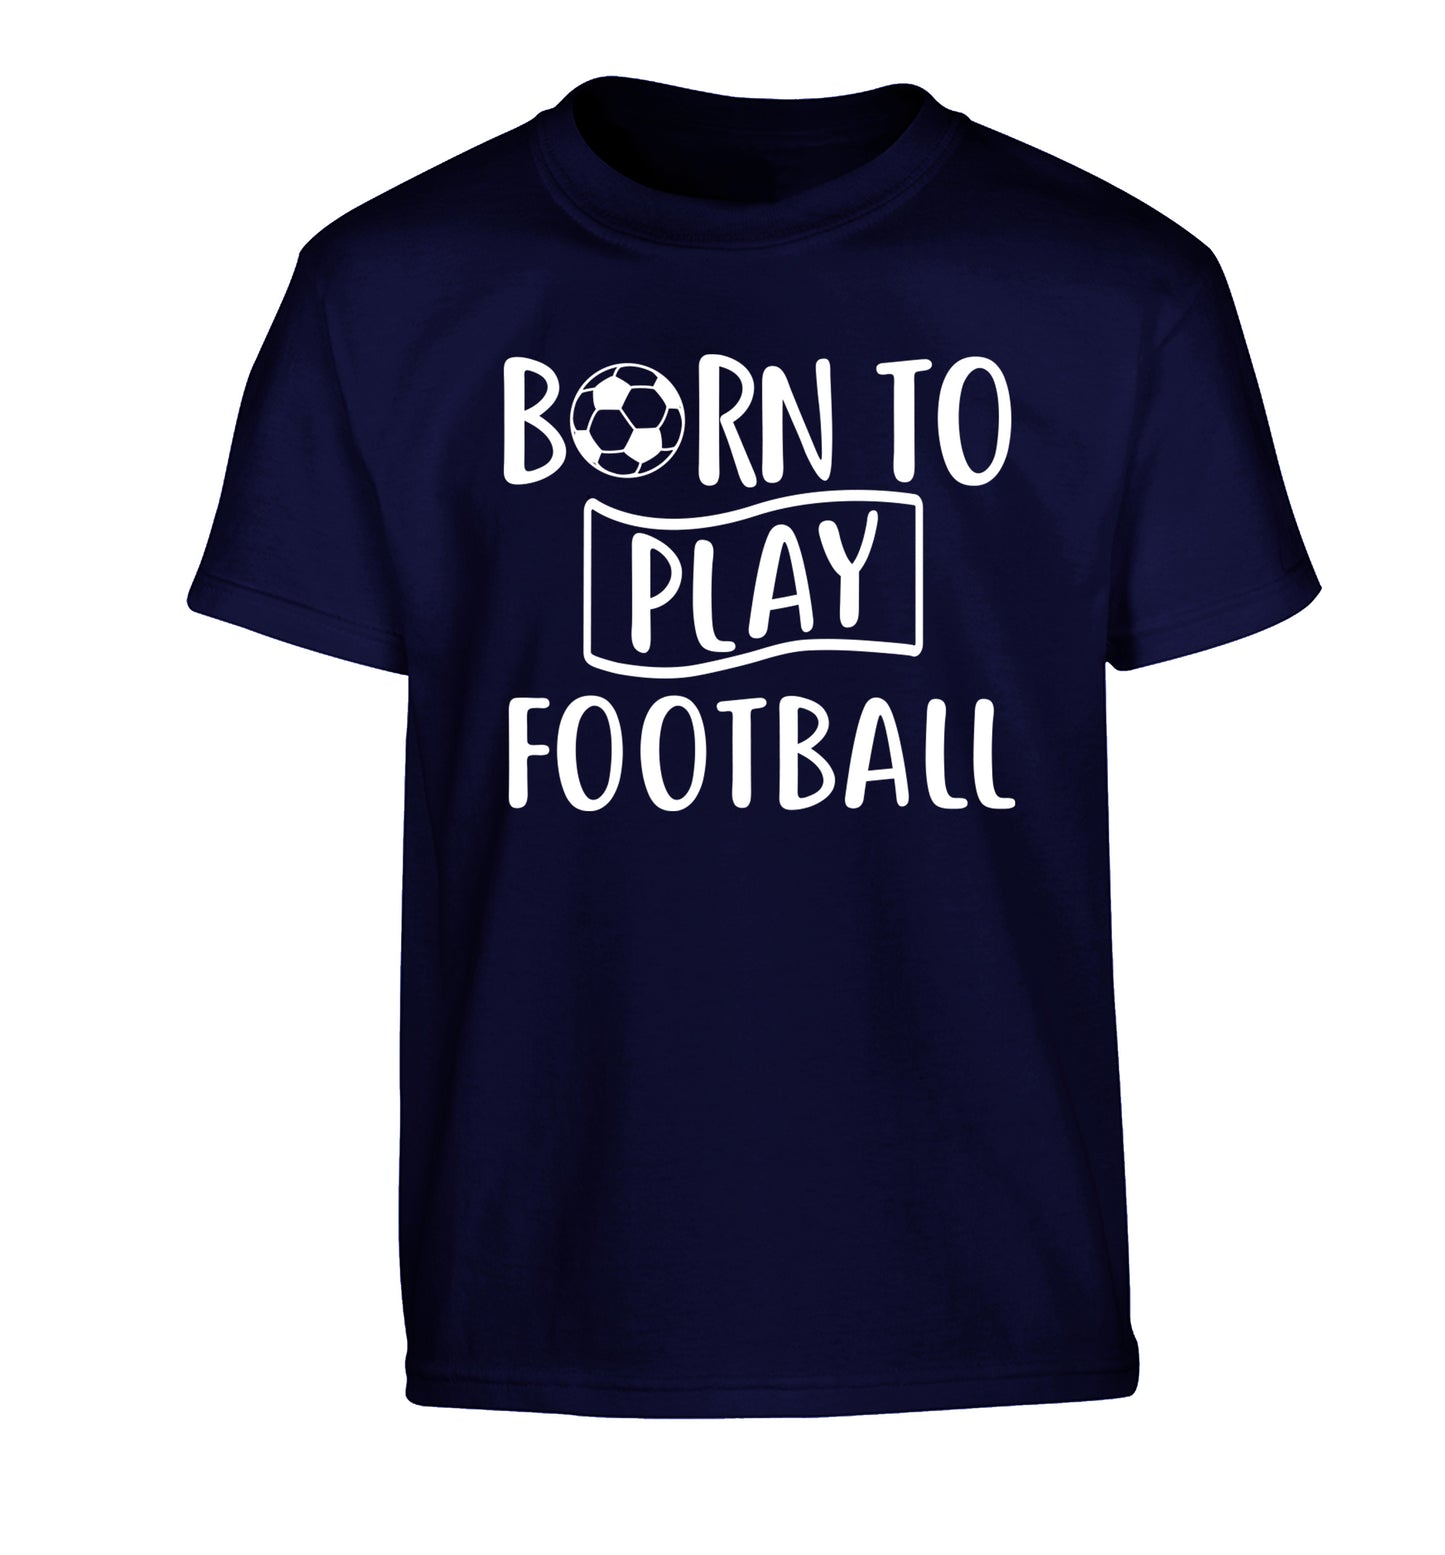 Born to play football Children's navy Tshirt 12-14 Years